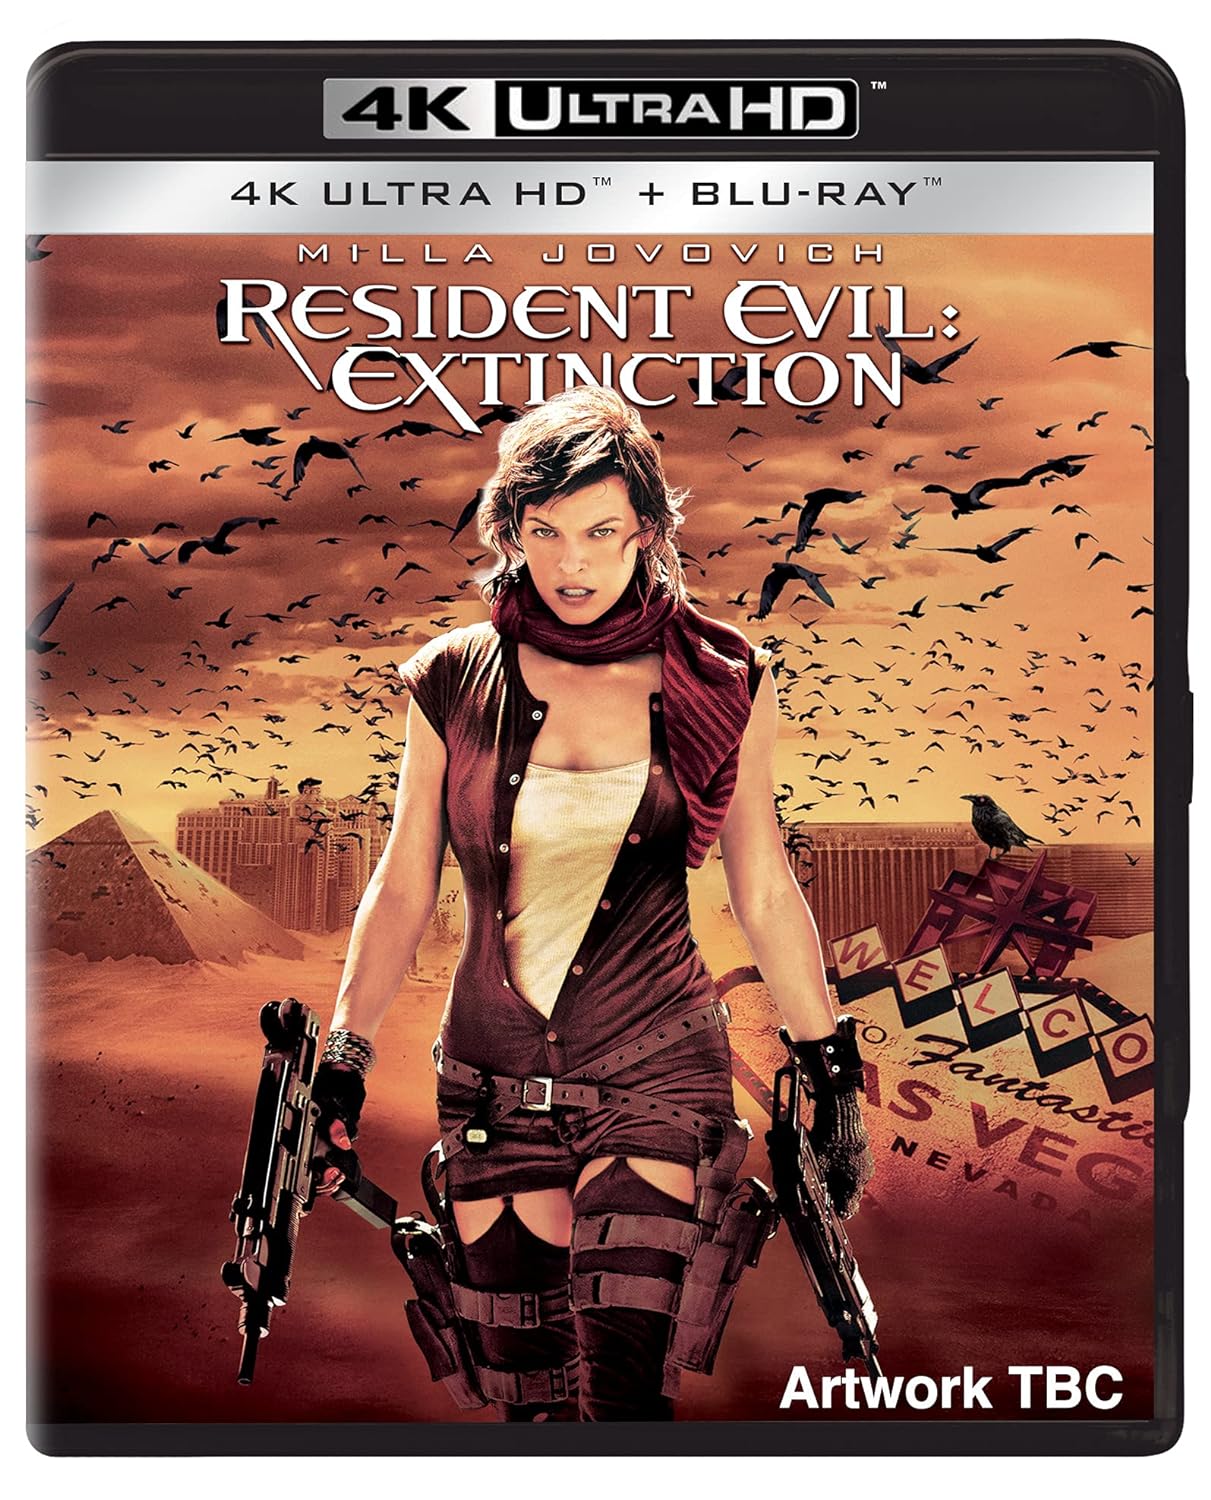 Resident Evil: Extinction (2007) 3905Kbps 23.976Fps 48Khz BluRay DTS-HD MA 5.1Ch Turkish Audio TAC